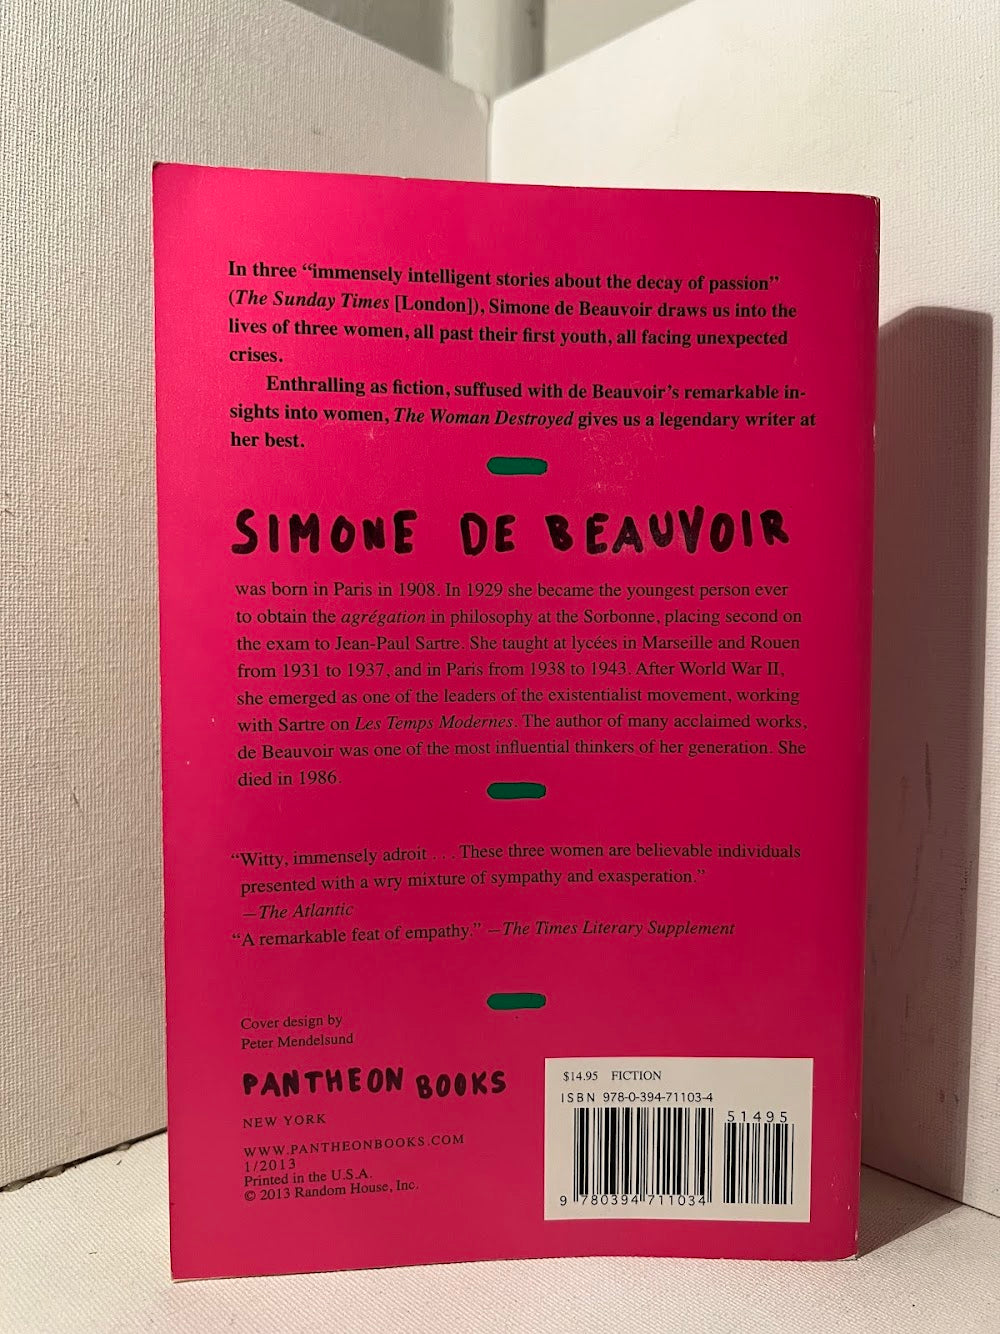 The Woman Destroyed by Simone de Beauvoir